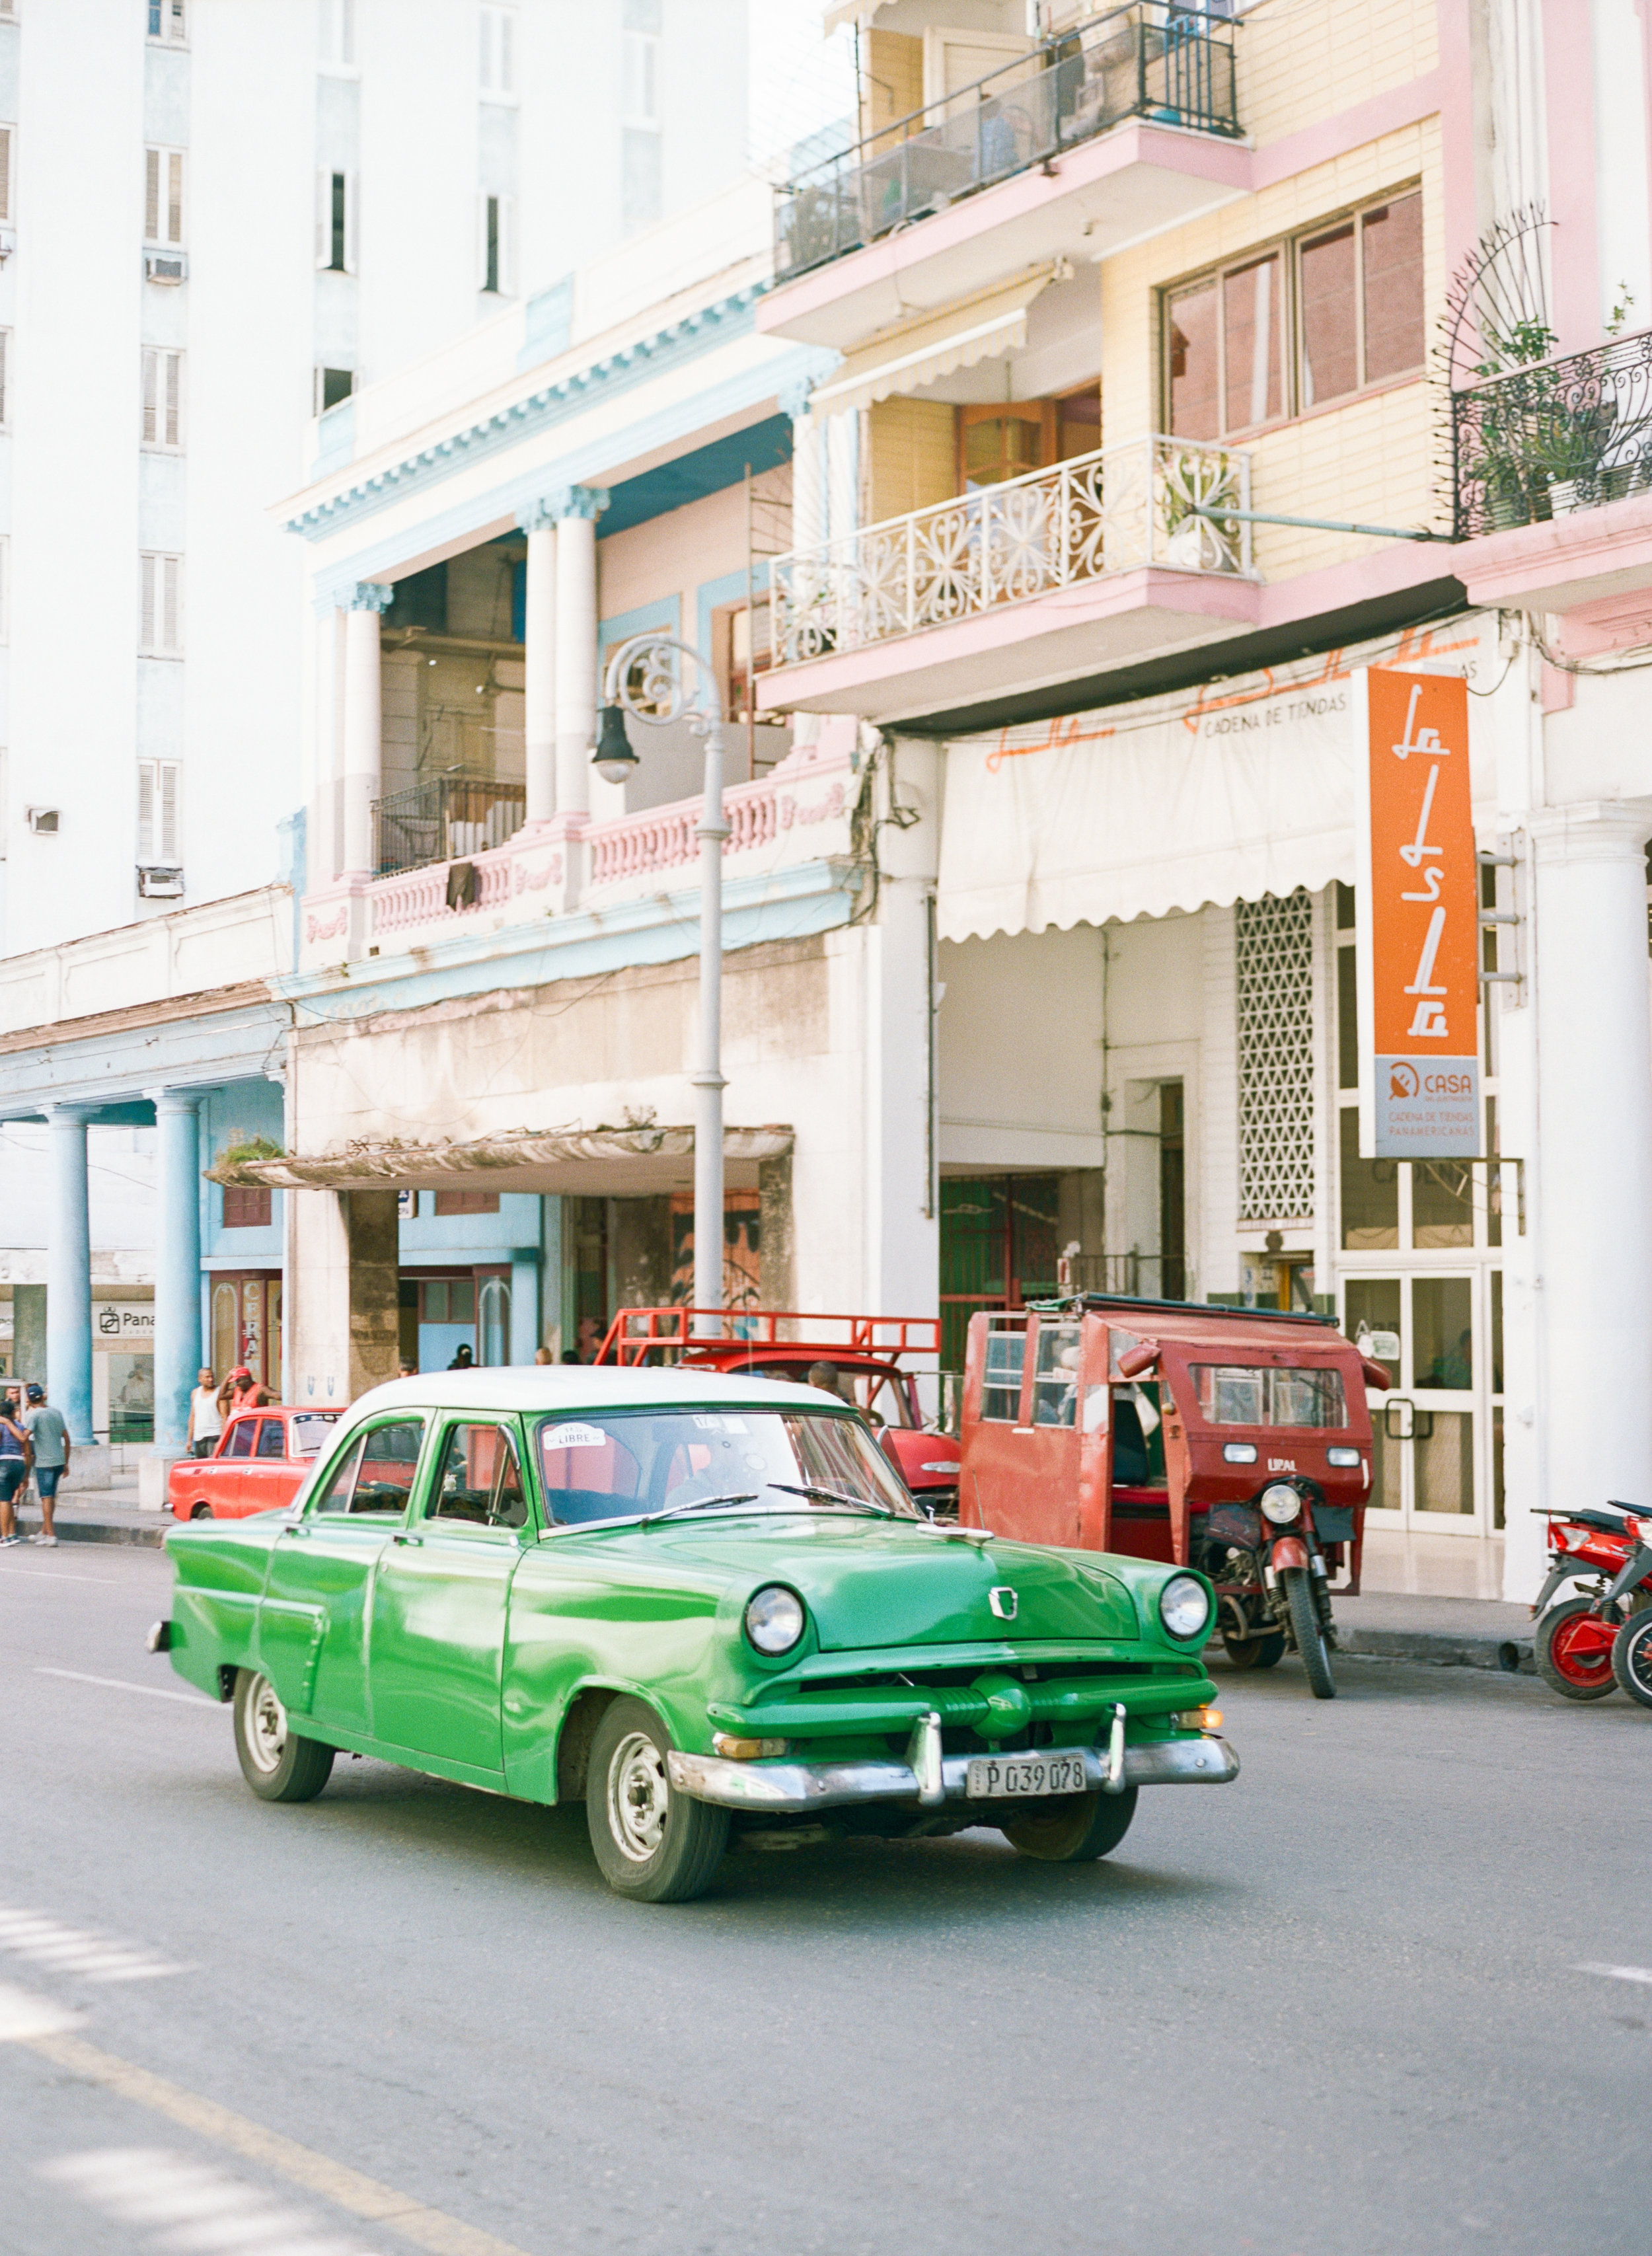 Cuba-Travel-photography-rachael-mcitnosh-photography-4.jpg